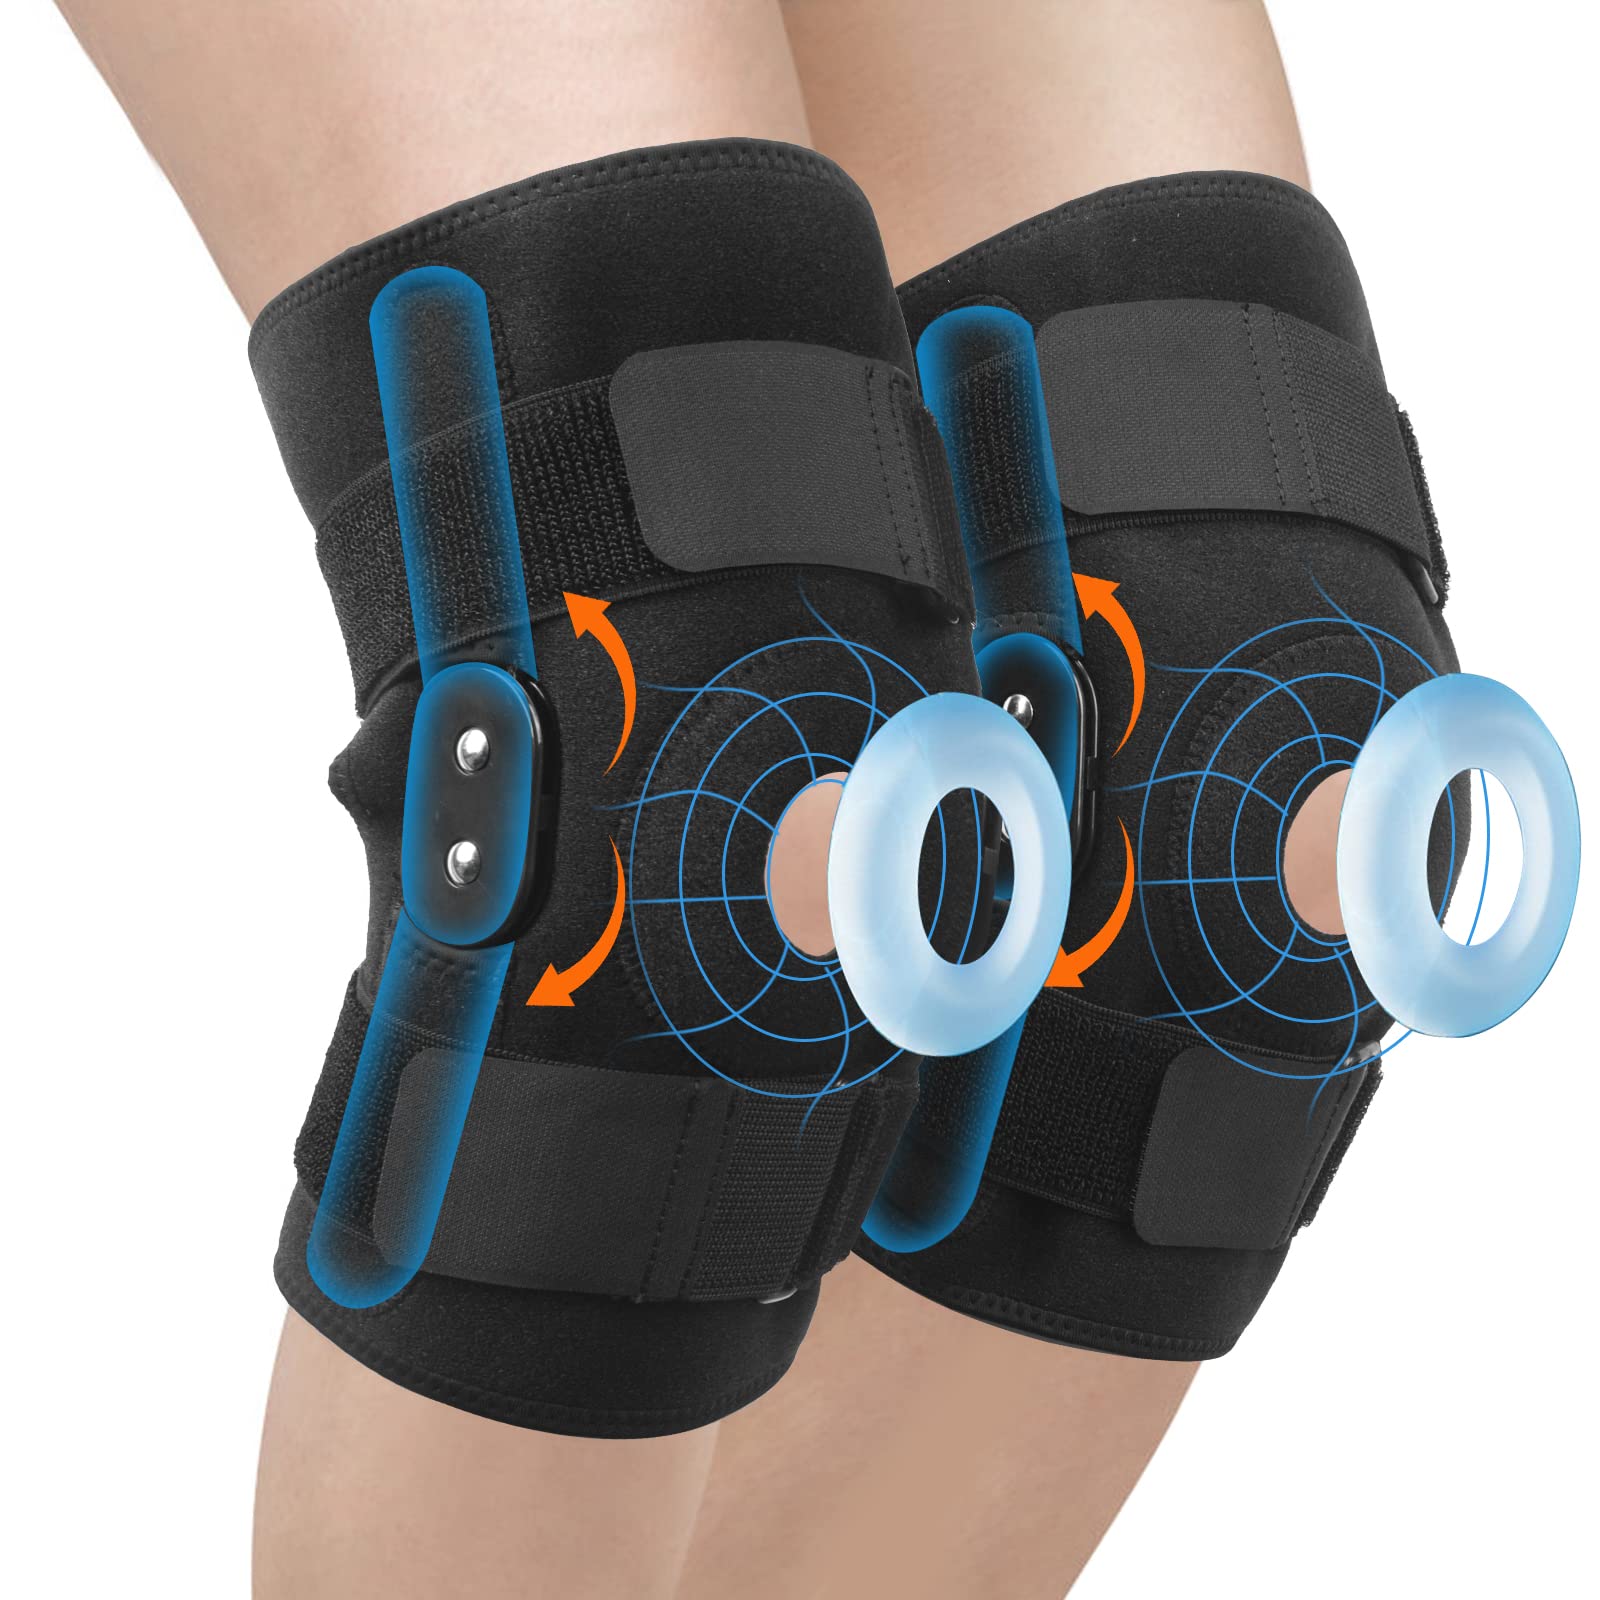 Buy Now - Body Care Velcro Knee Brace with Adjustable Straps